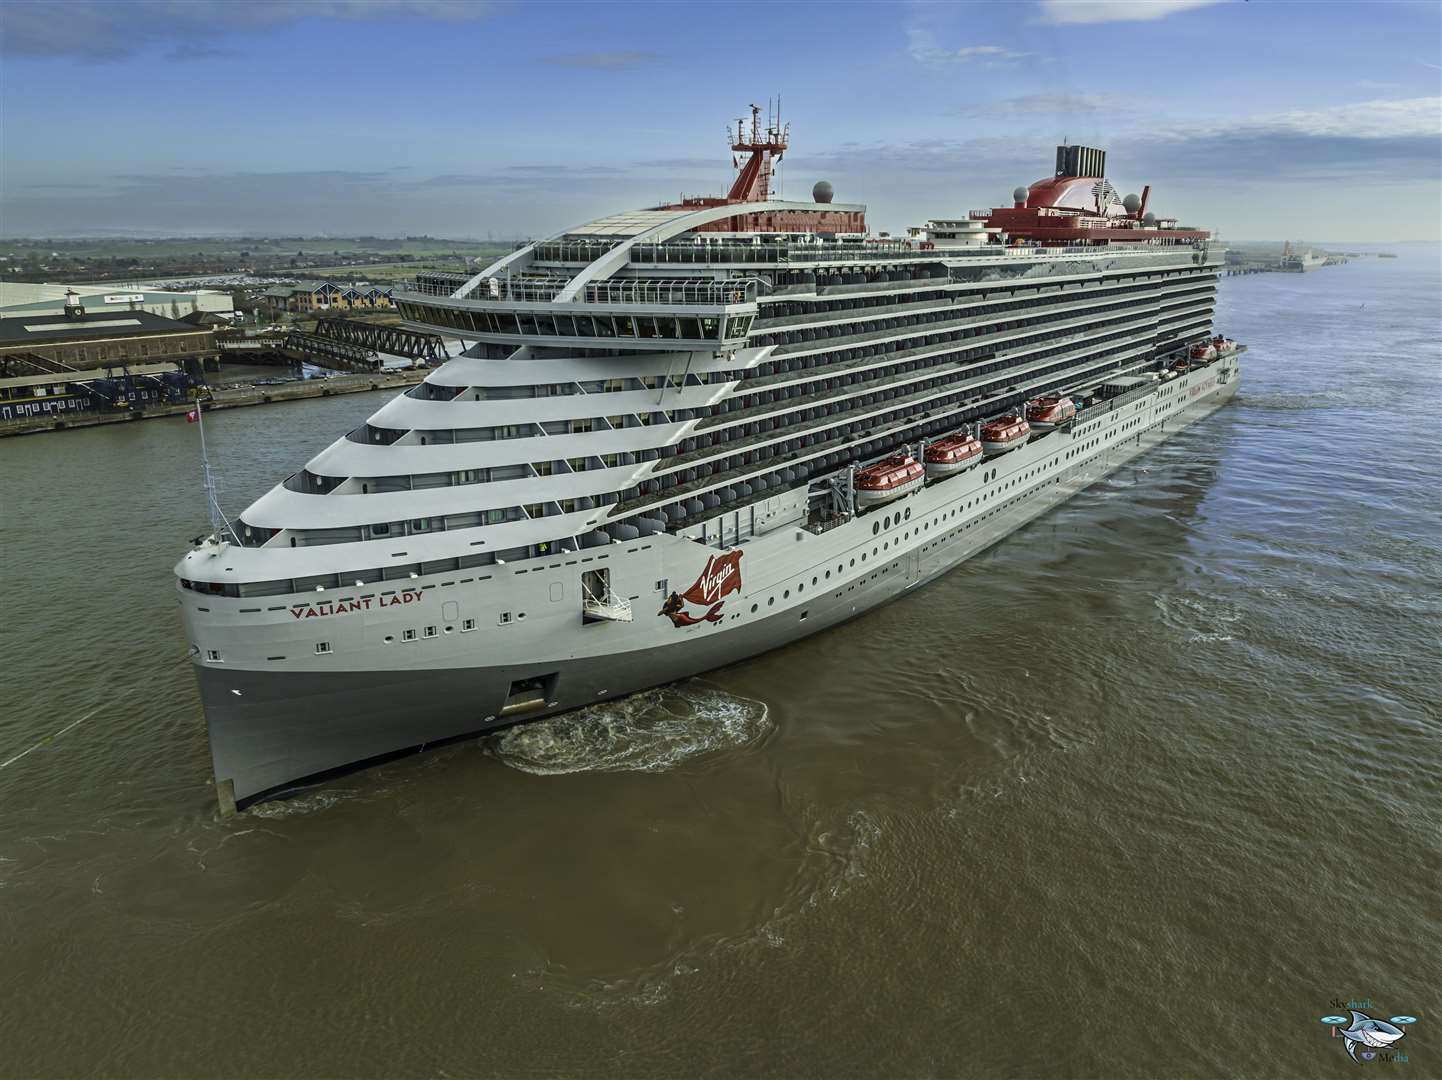 Virgin's state of the art liner Valiant Lady, docked off Gravesend. Picture: Mark Dillen / Skyshark Media